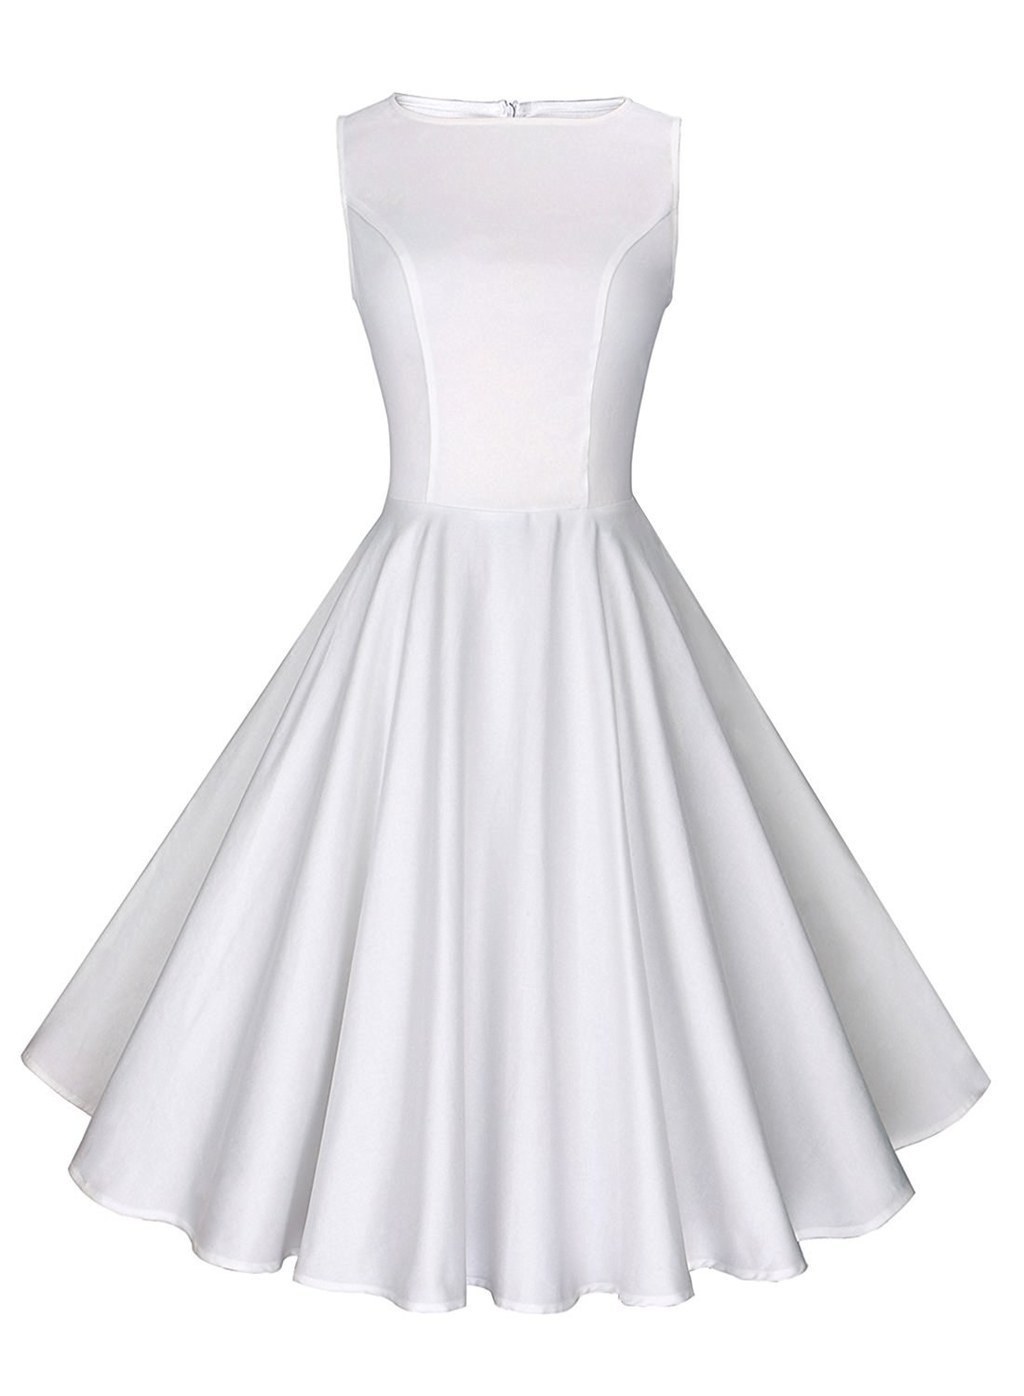 white dress from amazon